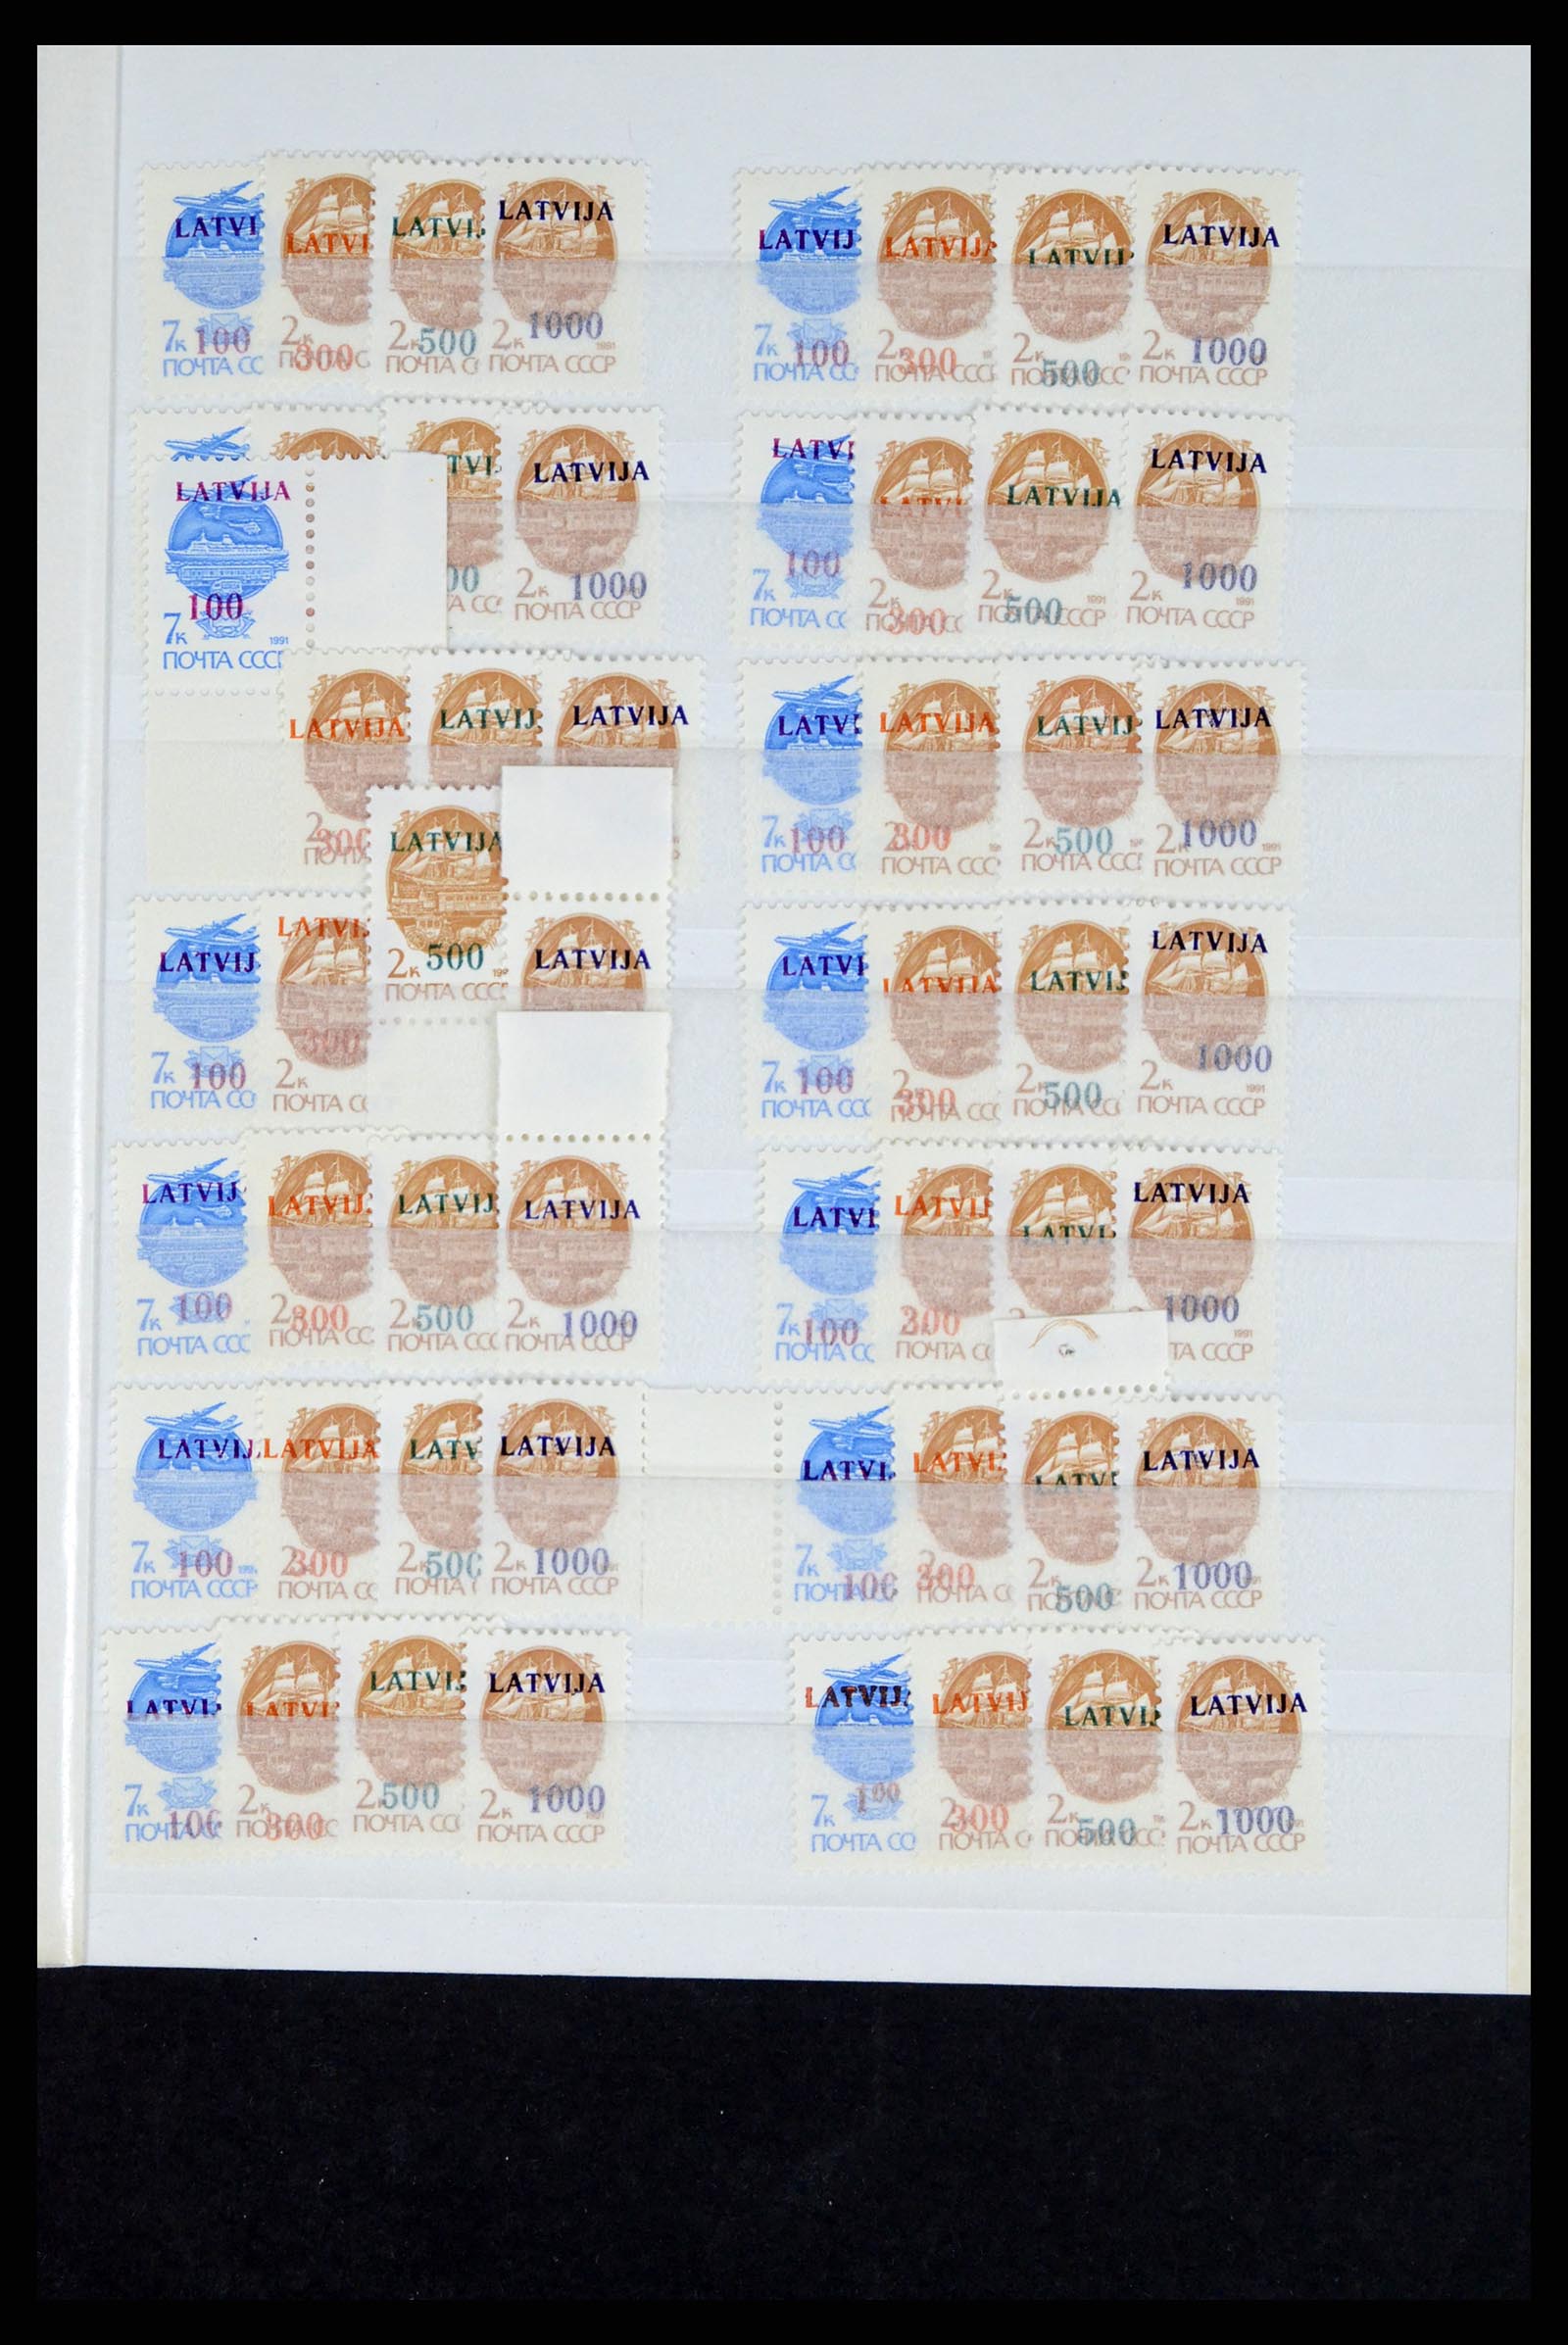 37351 300 - Postzegelverzameling 37351 Europese landen postfris 1990-2000.